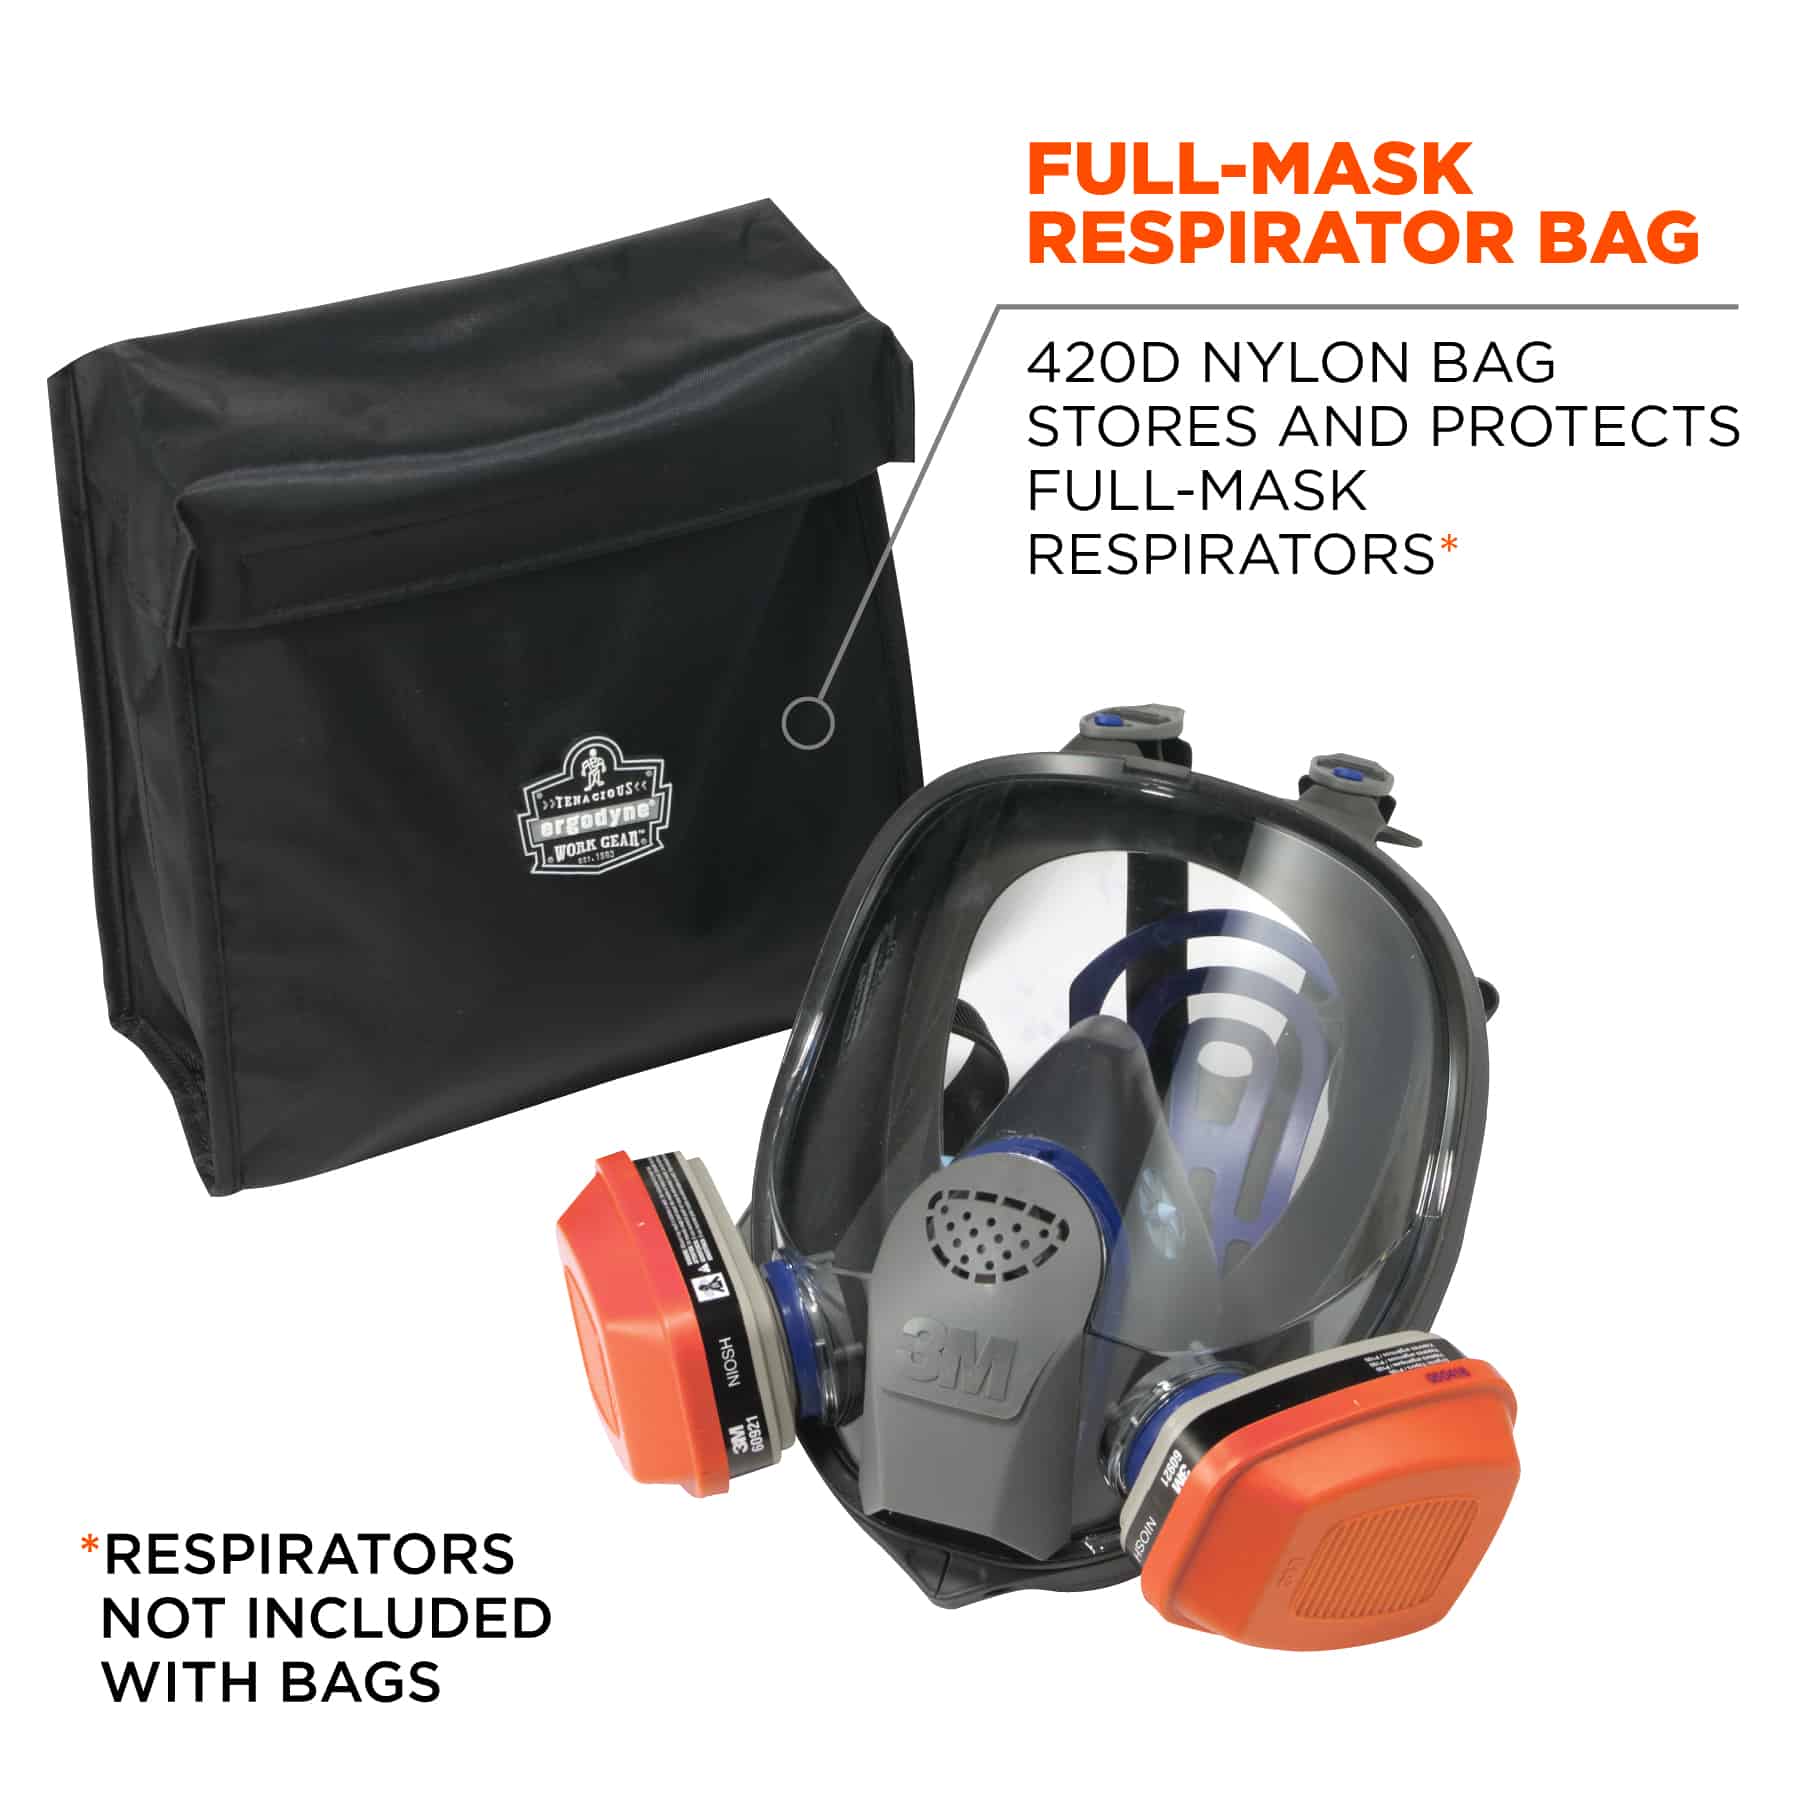 1 New Full Face Respirator with carry bag New unused & unworn Medium size 